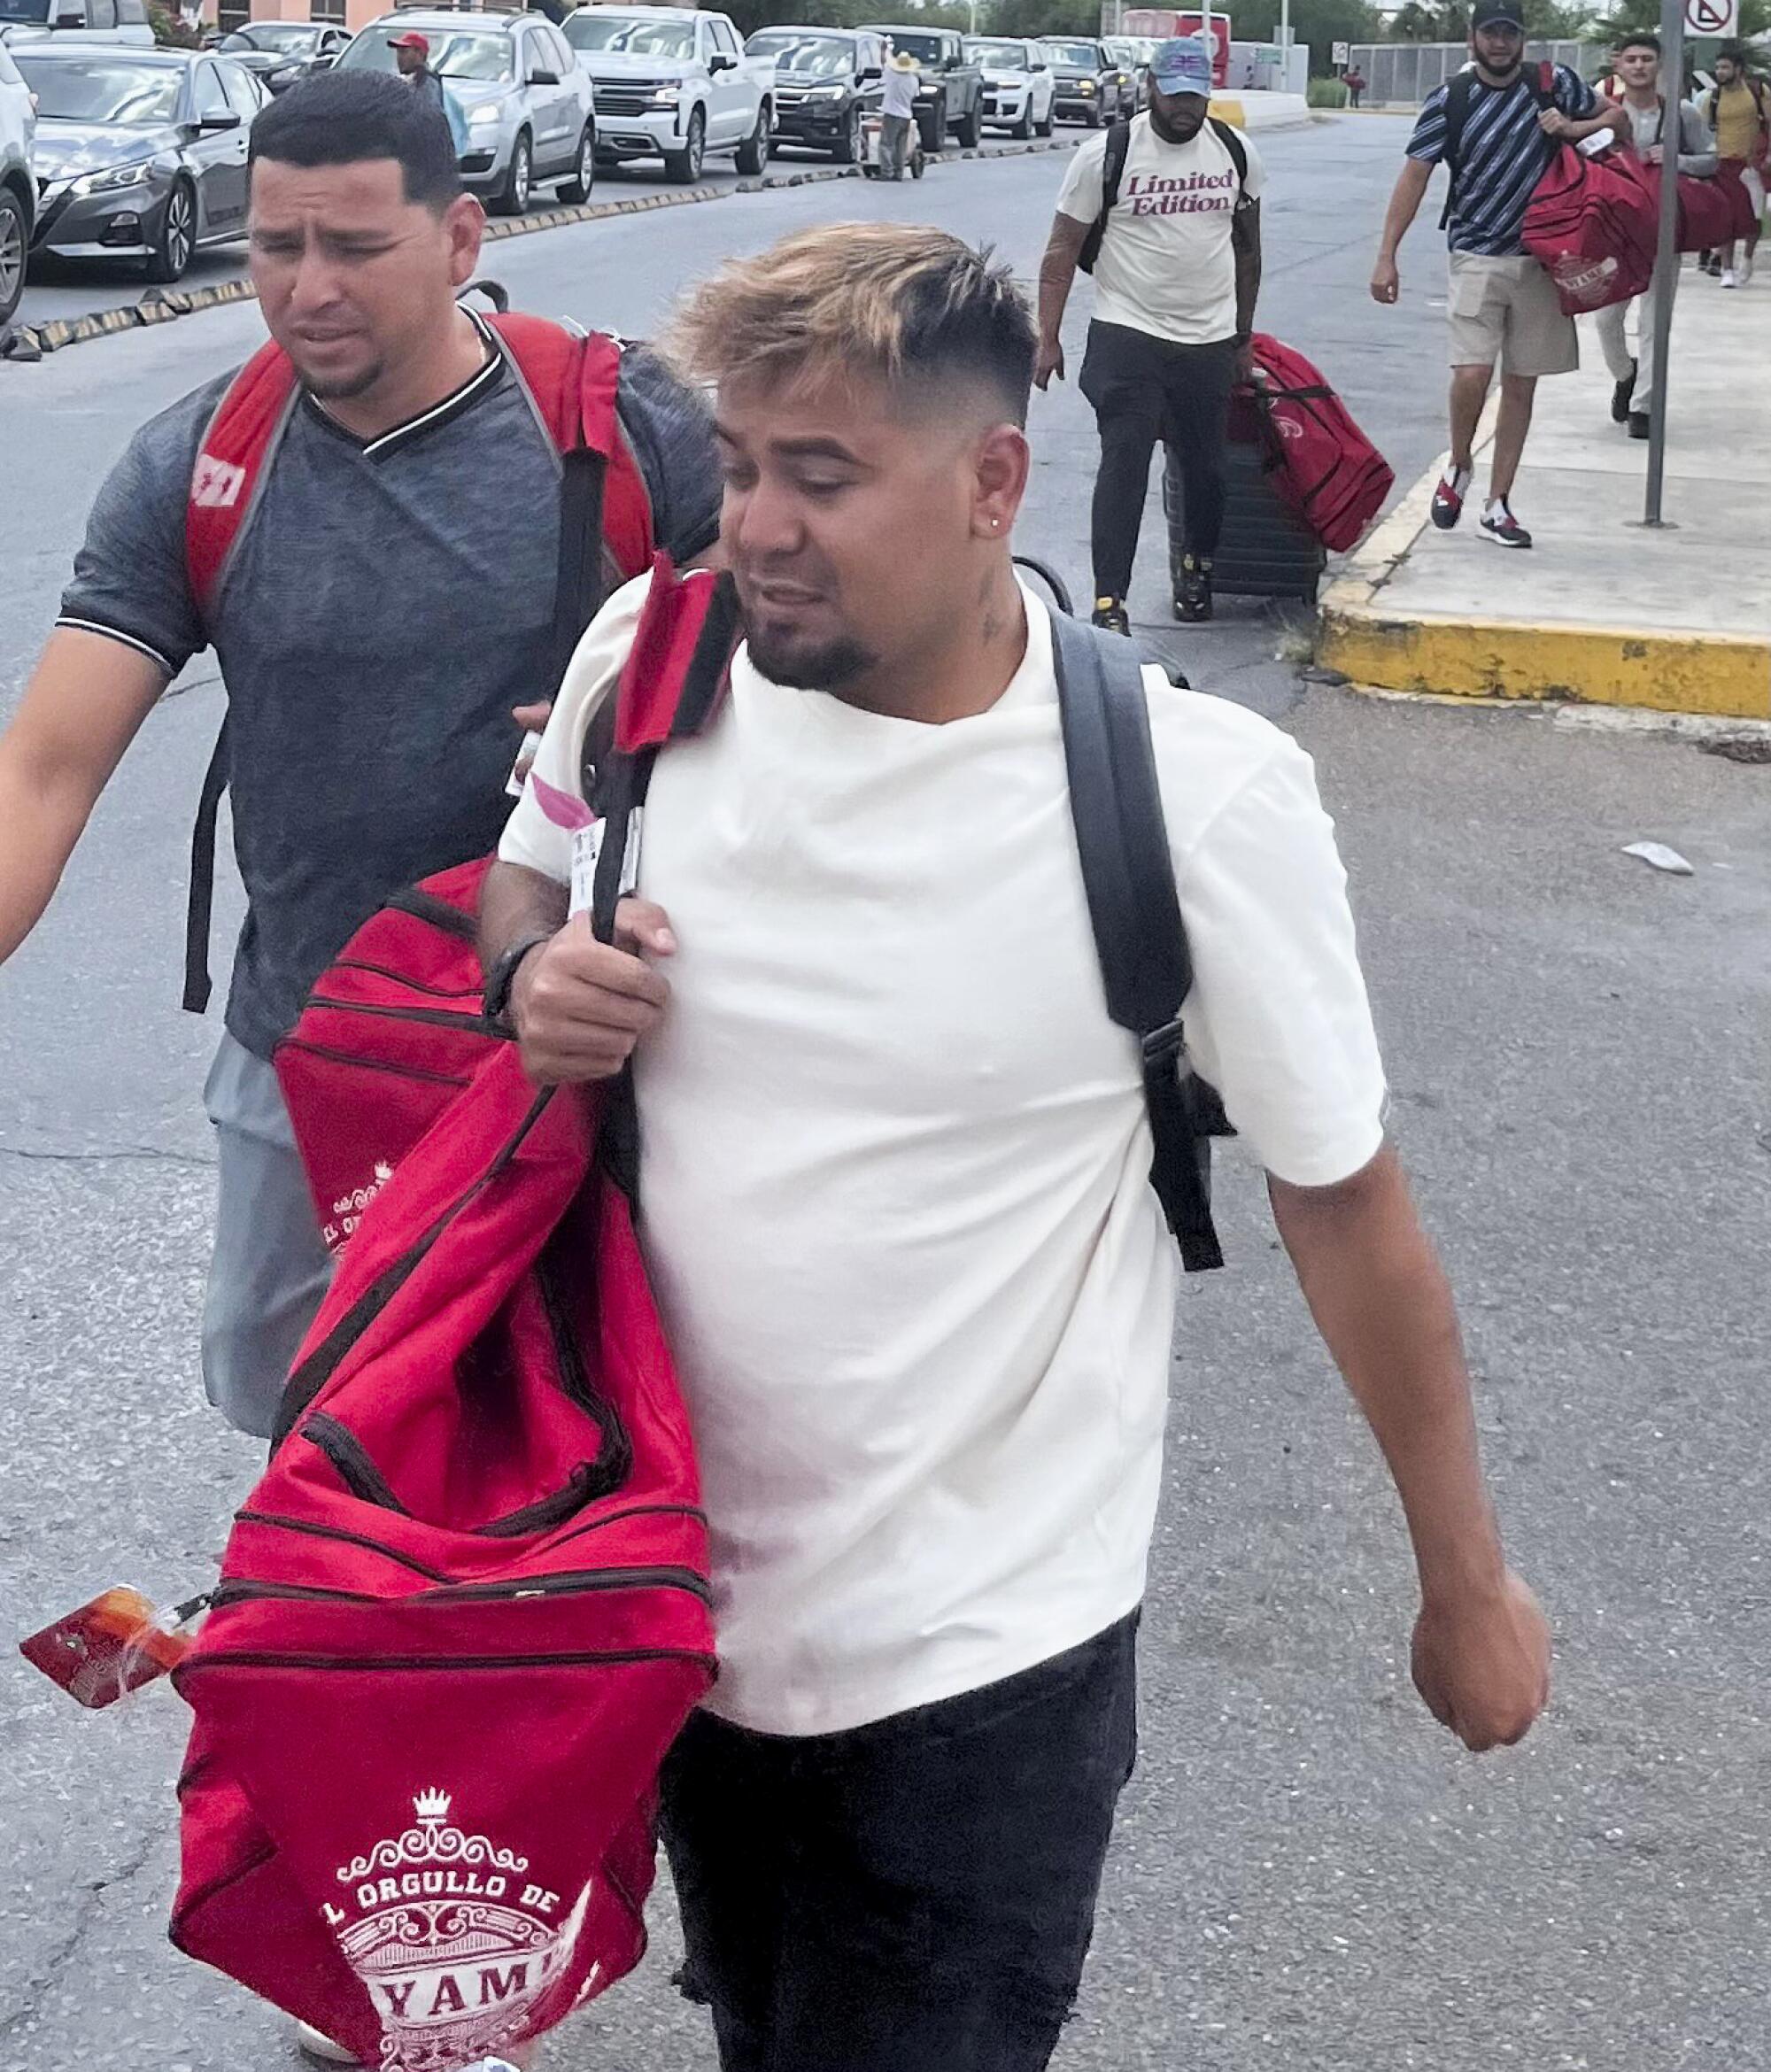 Veracruz players Christian Zazueta, left, and Samuel Zazueta carry their equipment bags toward a bridge.